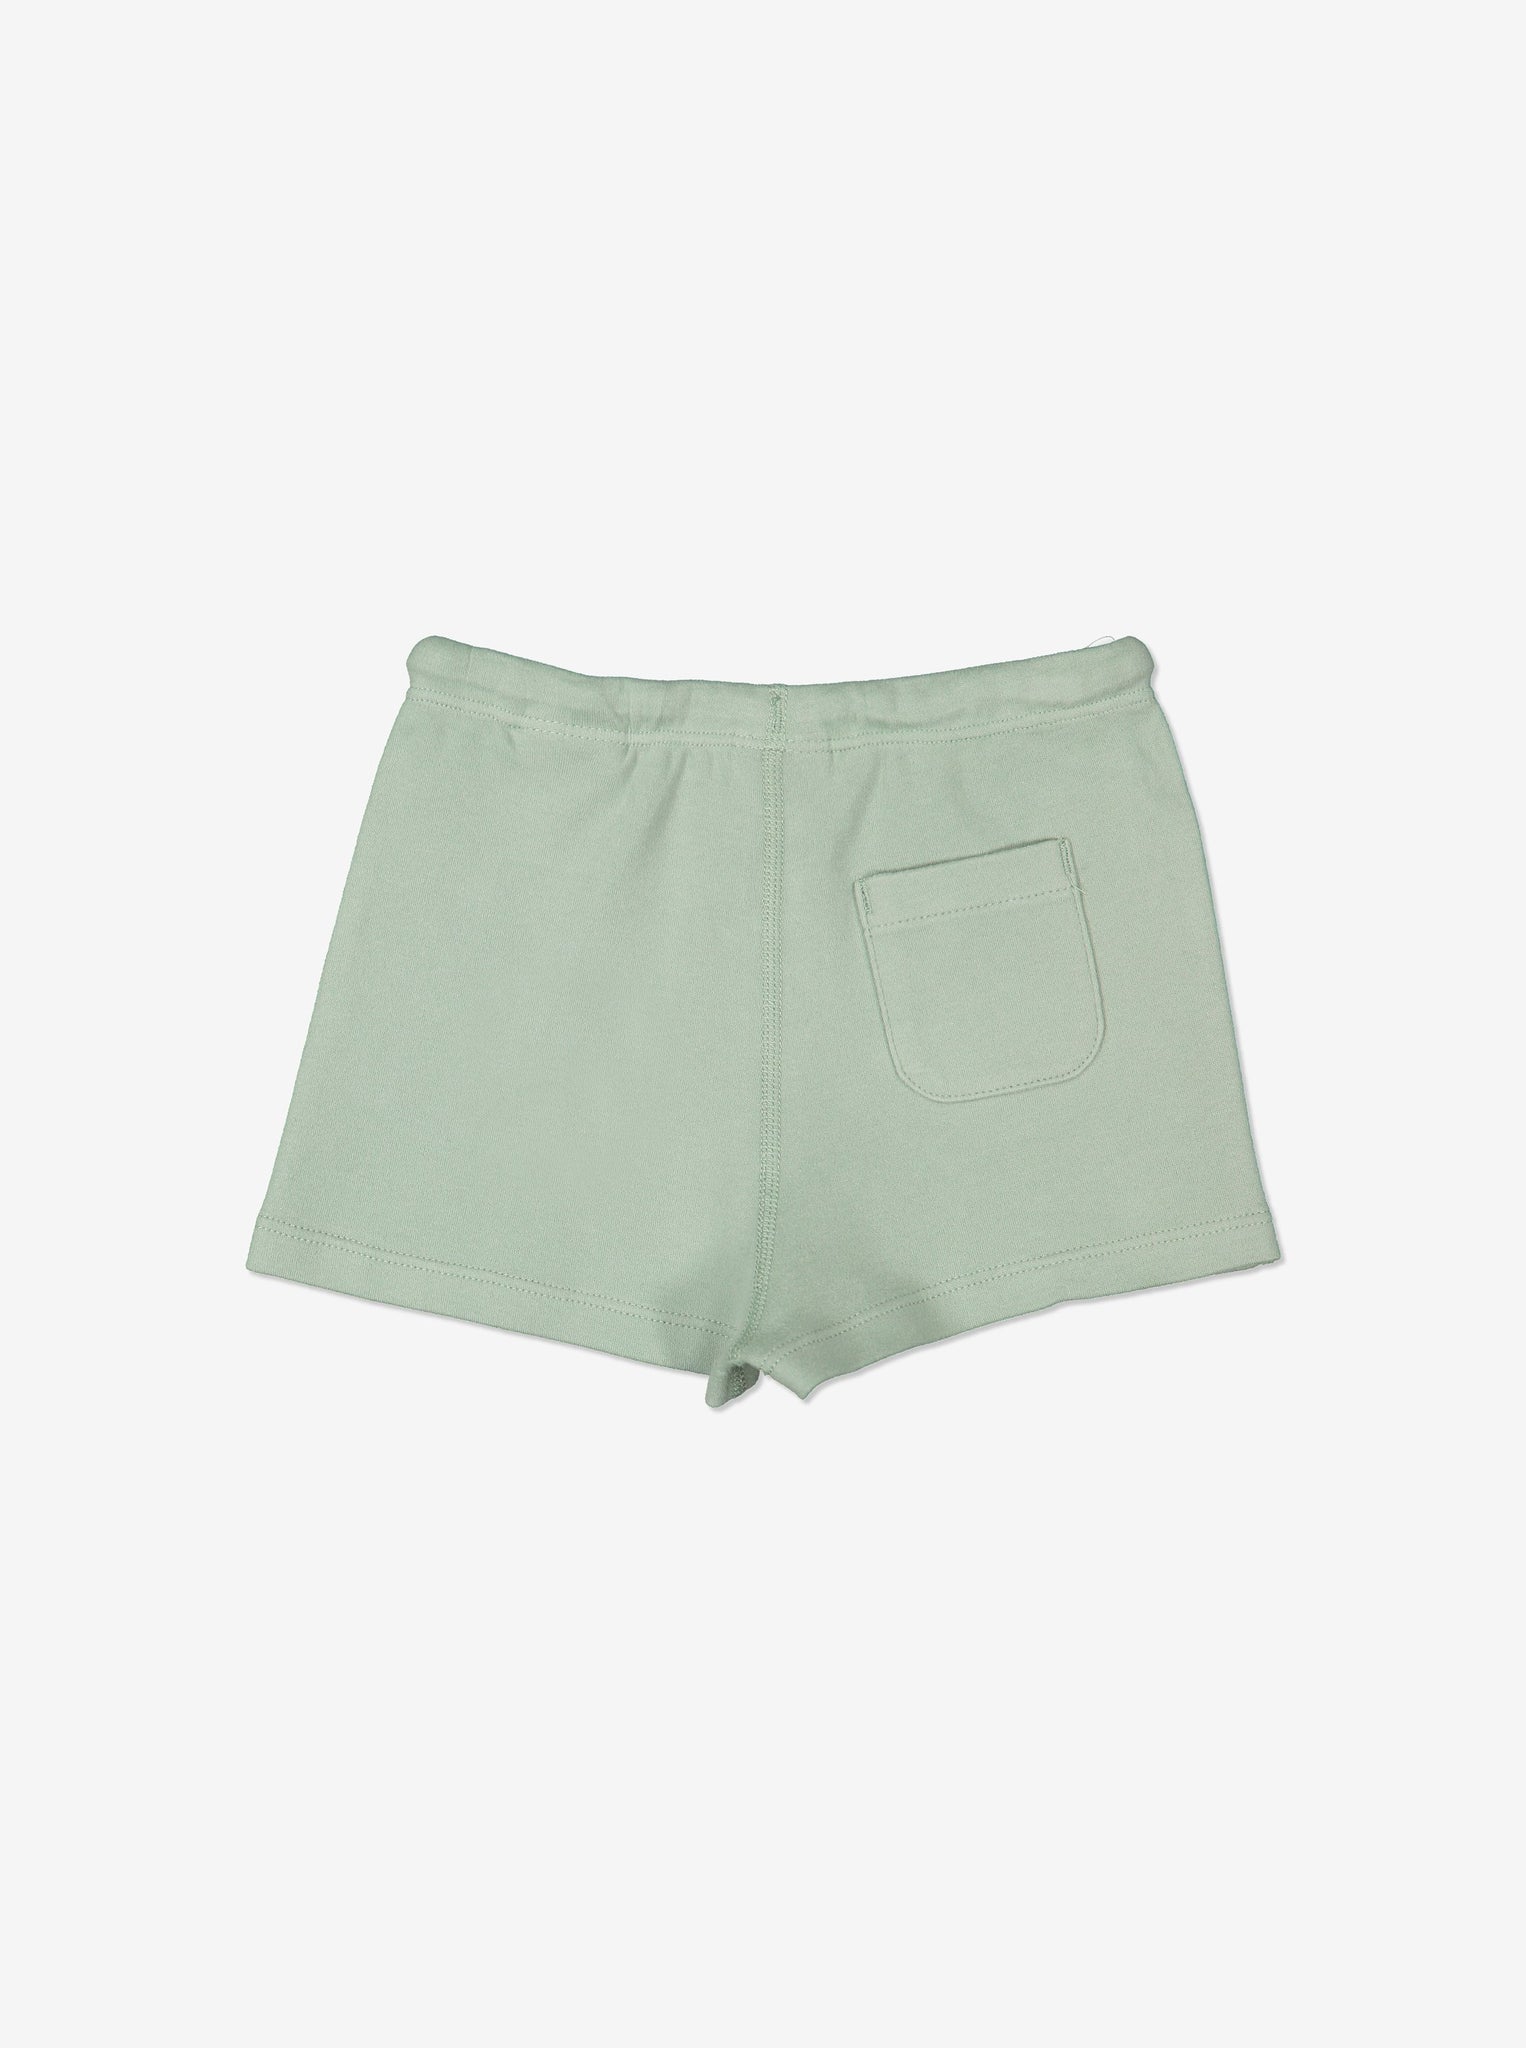 Unisex Green Soft Organic Cotton Newborn Baby Shorts 